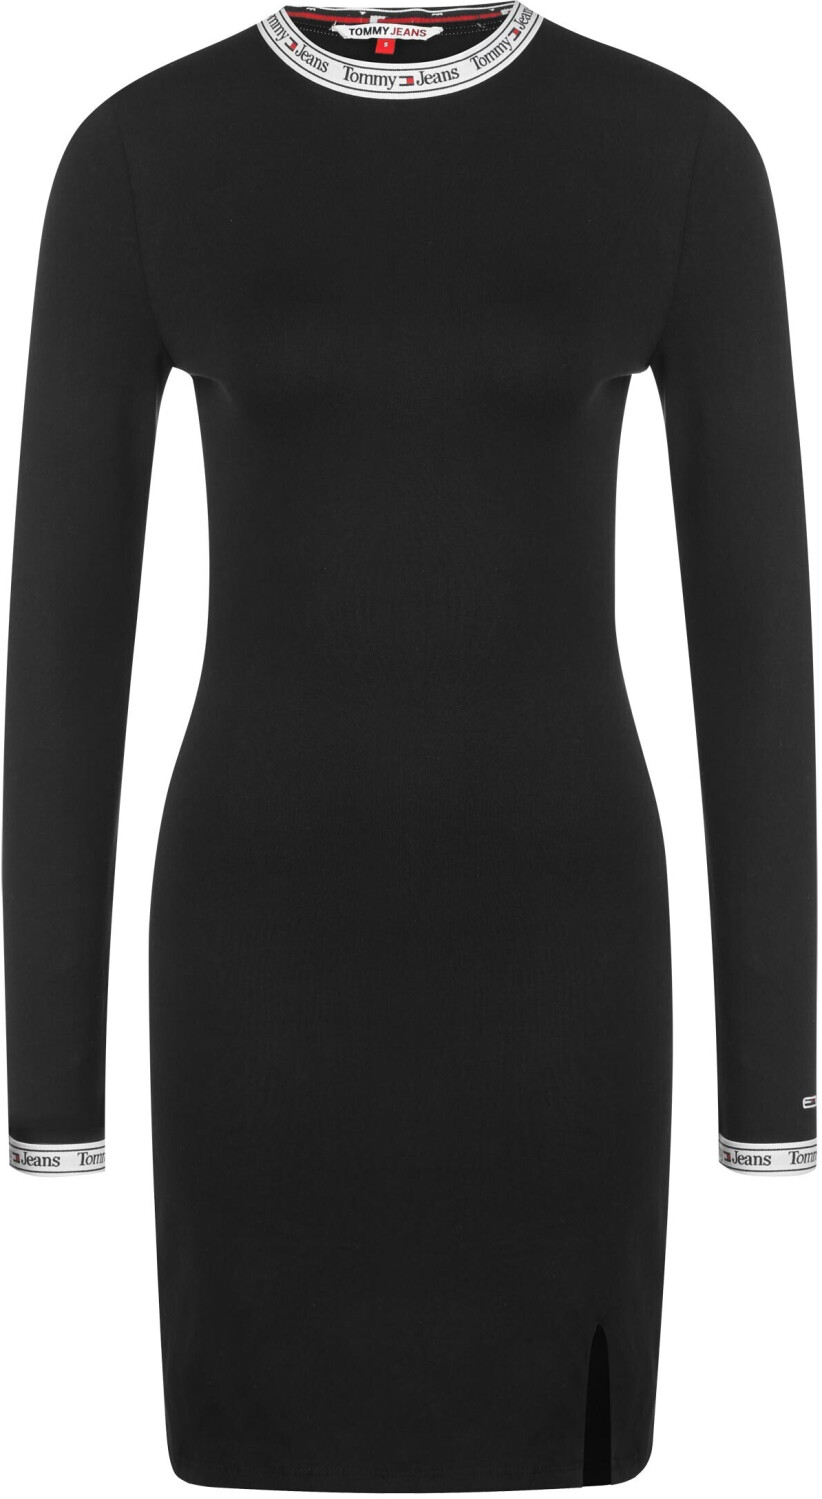 black Logo Bodycon bei Sleeve € Tommy Hilfiger 59,99 ab Preisvergleich | Dress Long Tjw